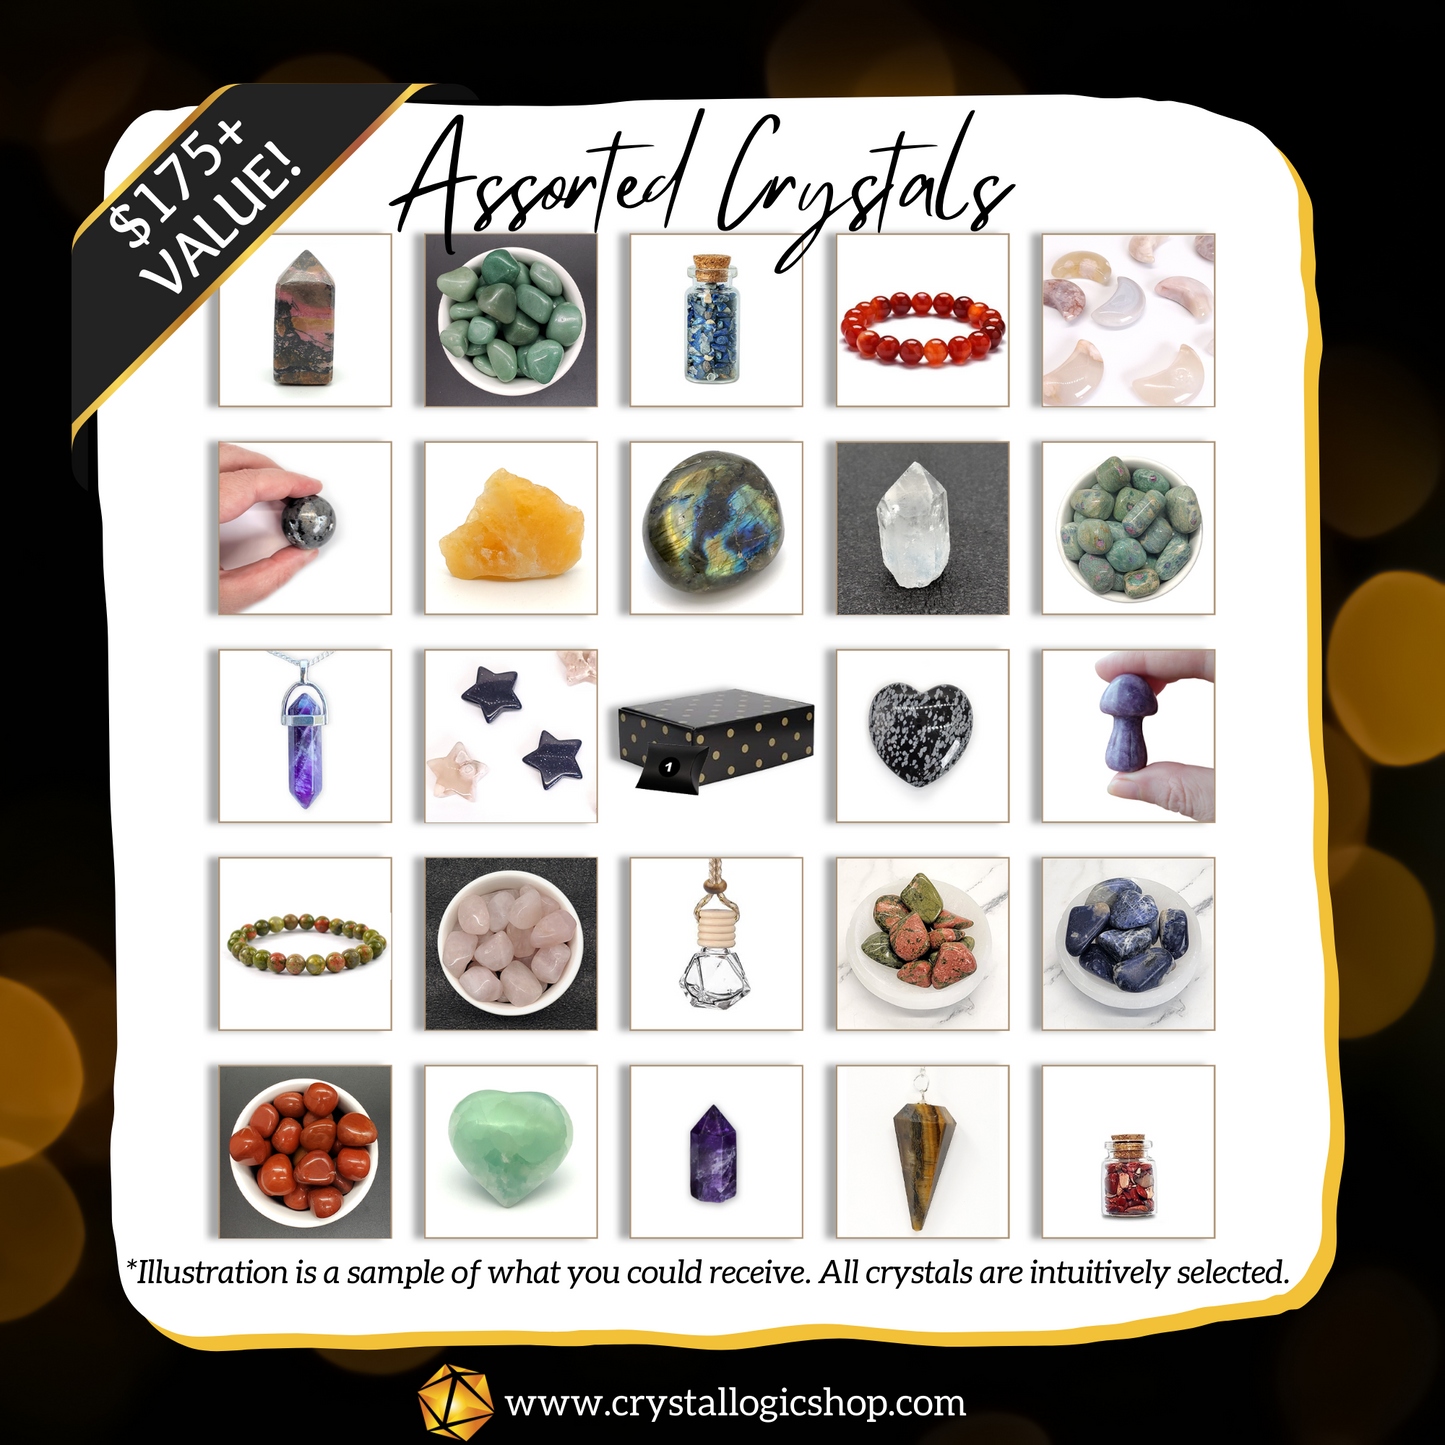 24-Day Advent Calendar - Assorted Crystals